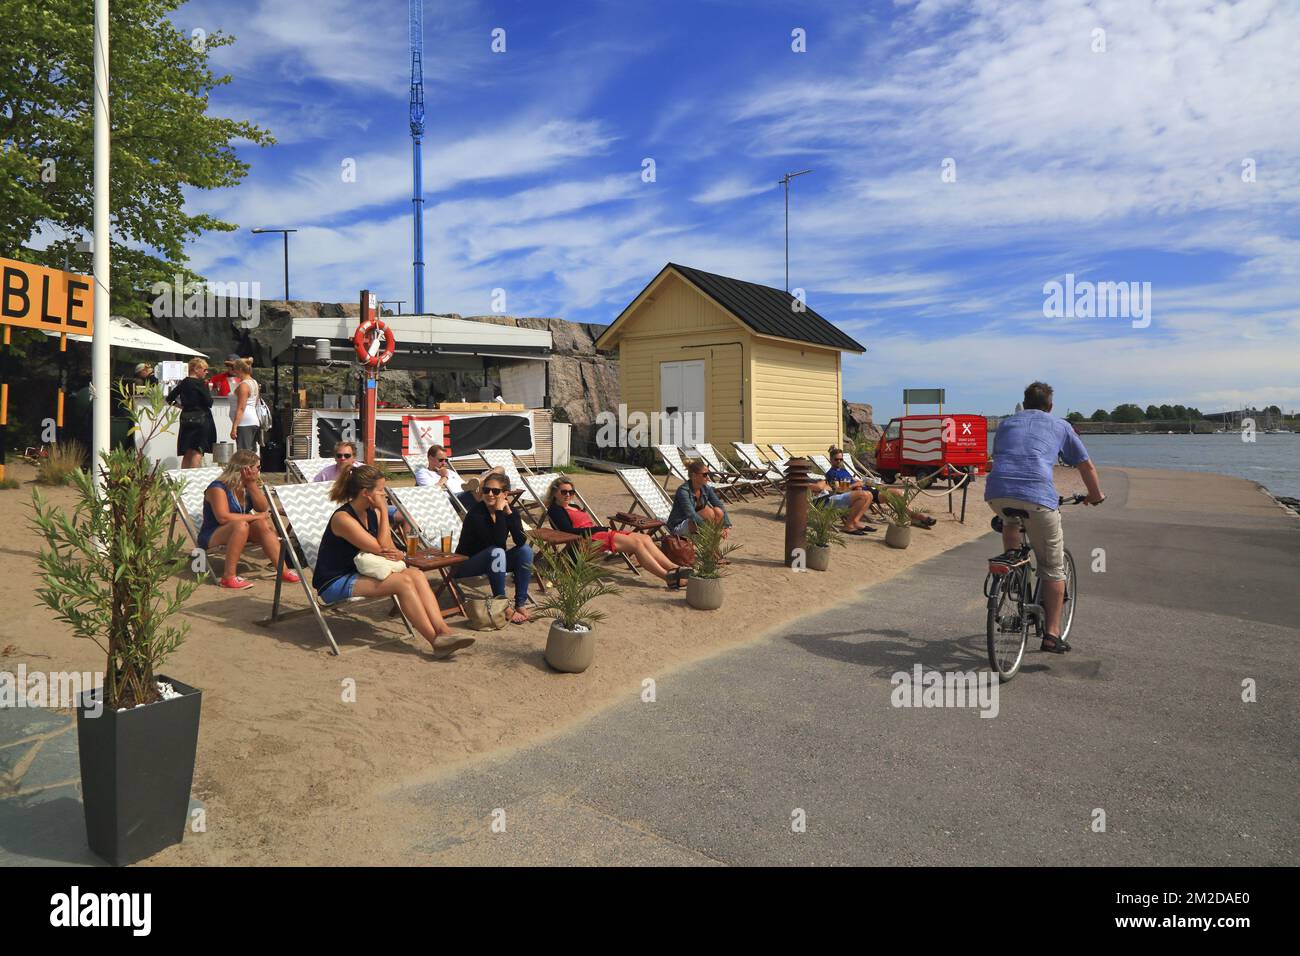 Helsinki | Europe, Finlande, Helsinki,,Petite plage insolite sur un quai 01/08/2017 Foto Stock